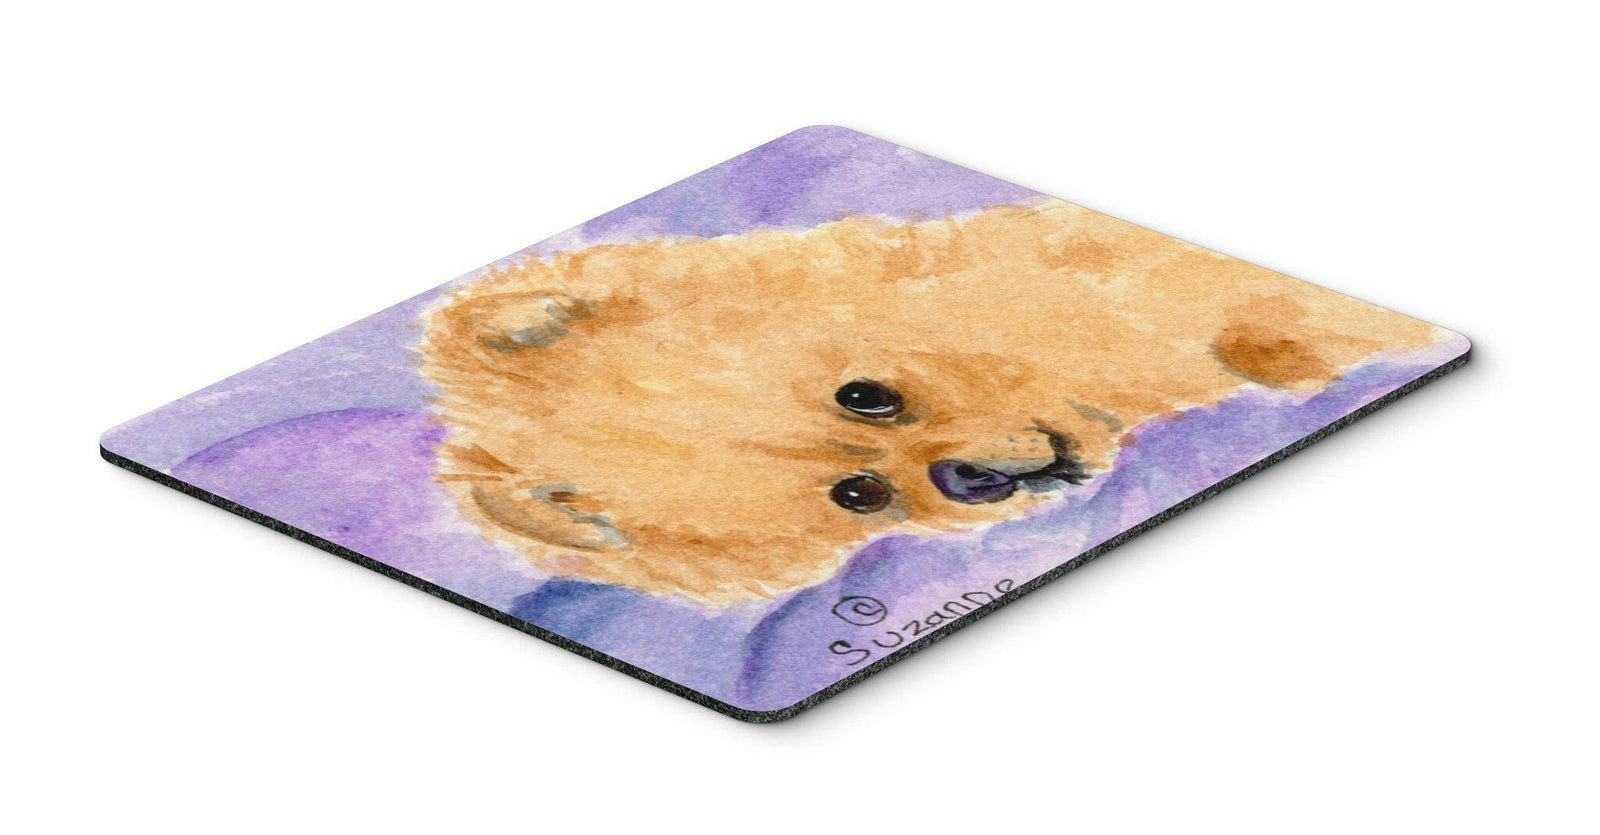 Pomeranian Mouse pad, hot pad, or trivet by Caroline's Treasures